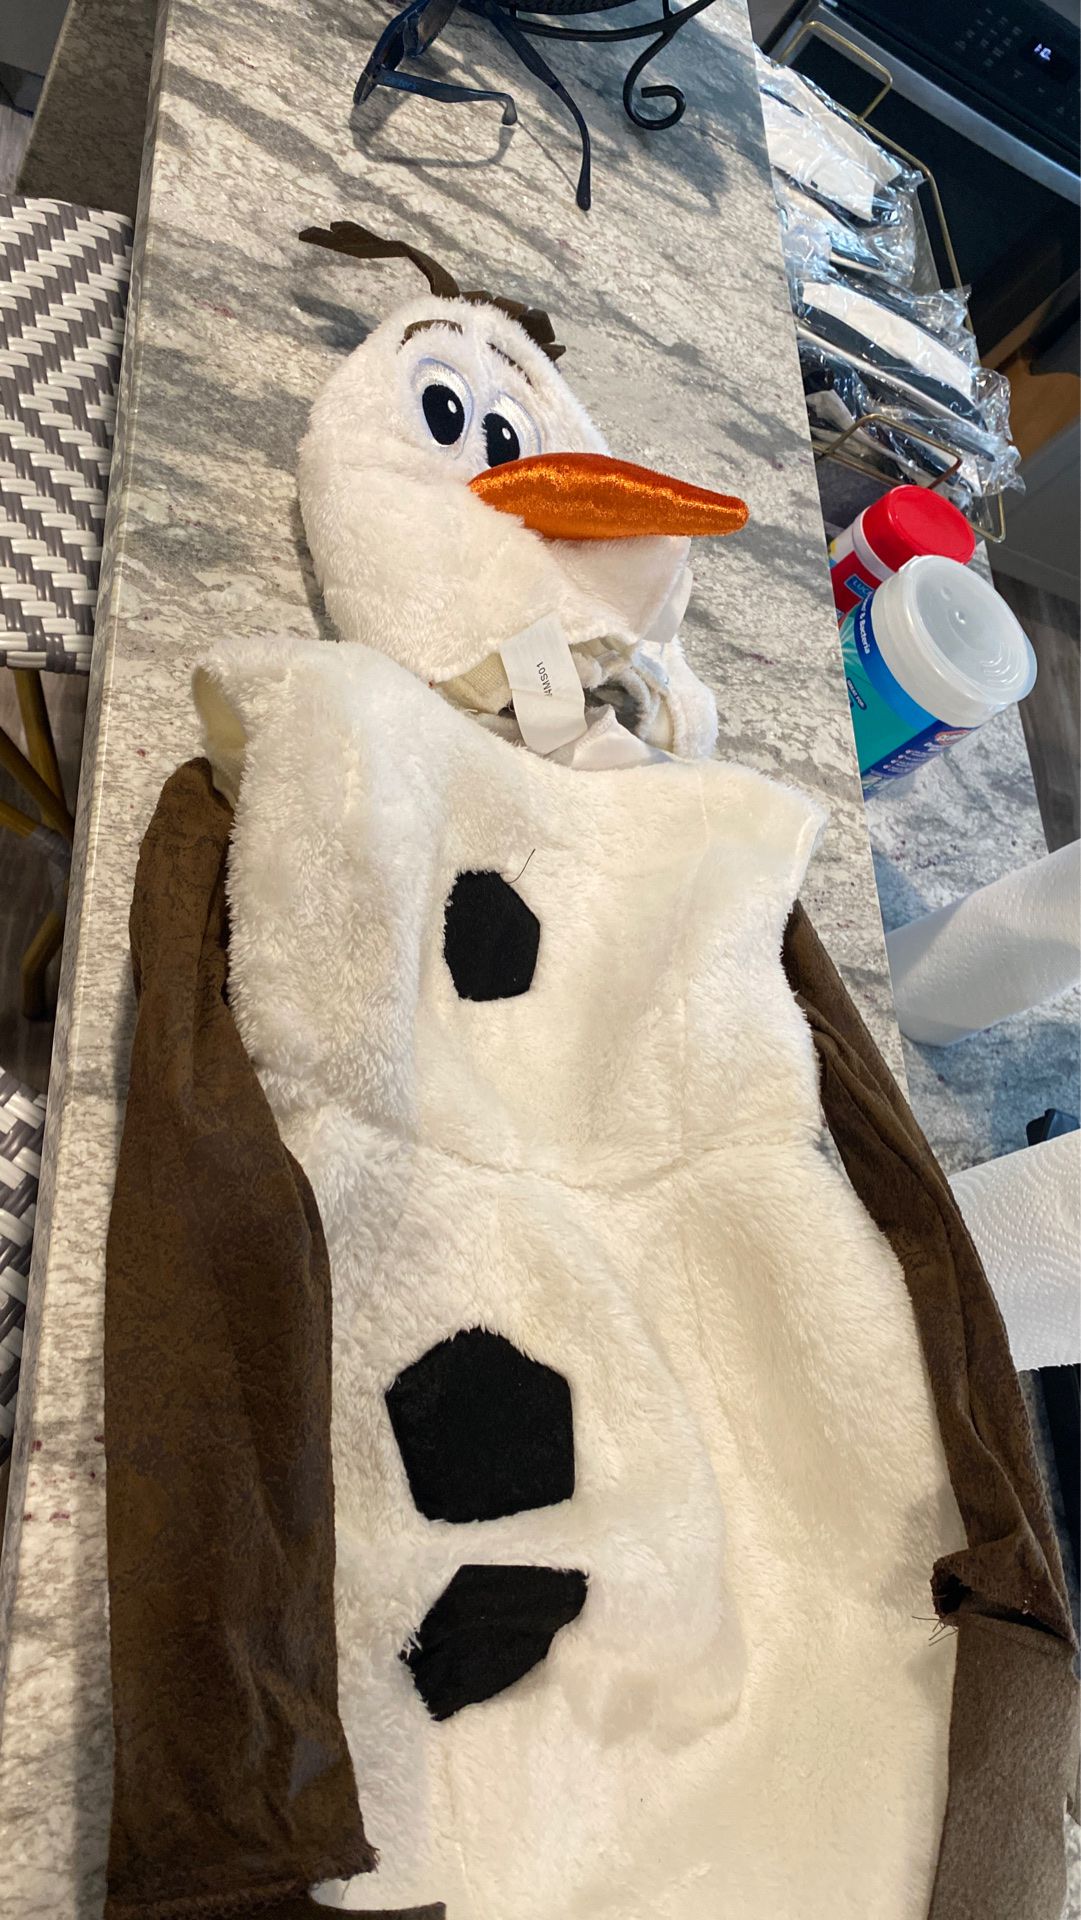 3T - 4T child Olaf Frozen costume